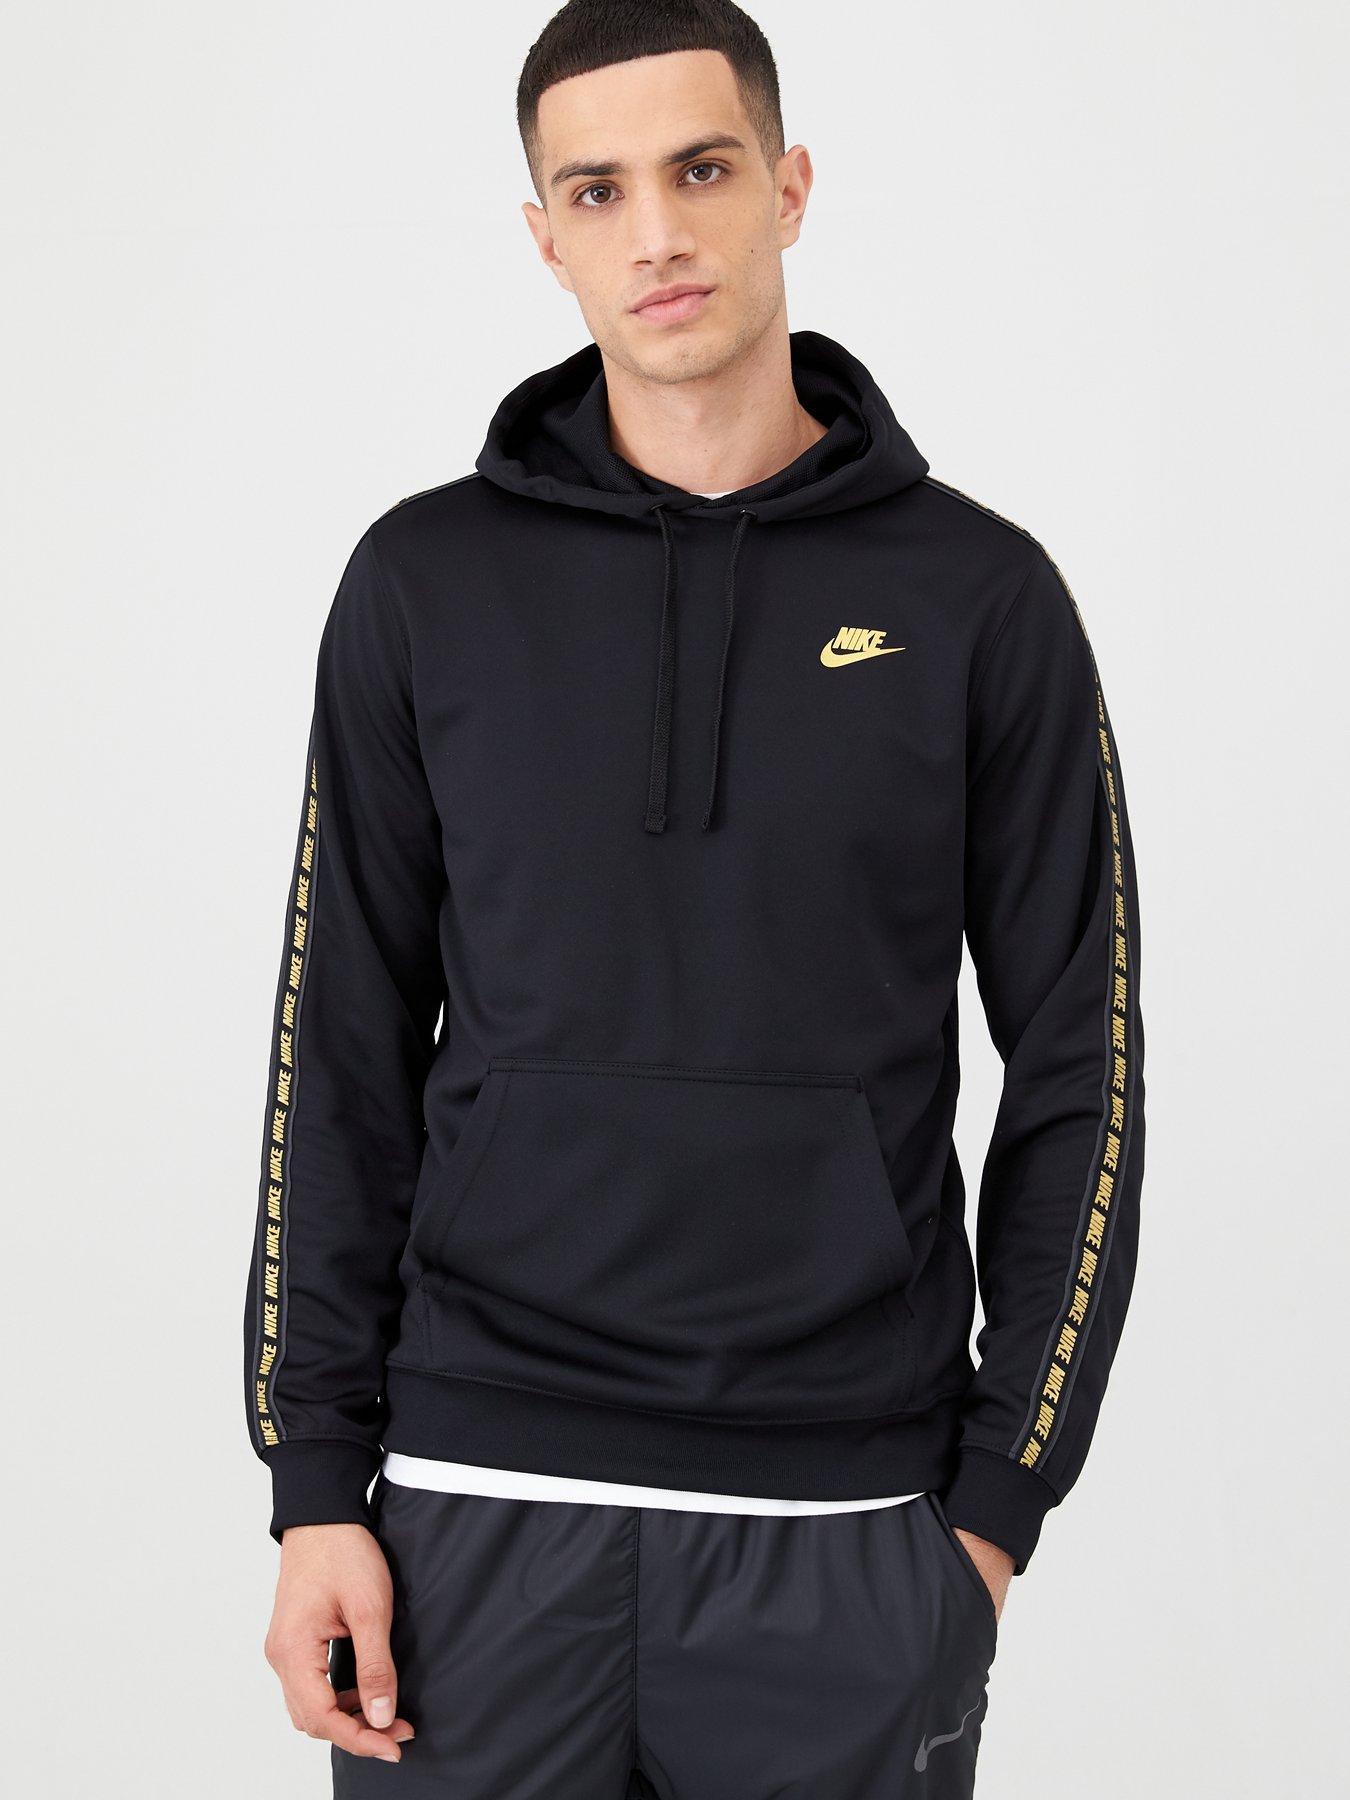 black and gold mens nike hoodie